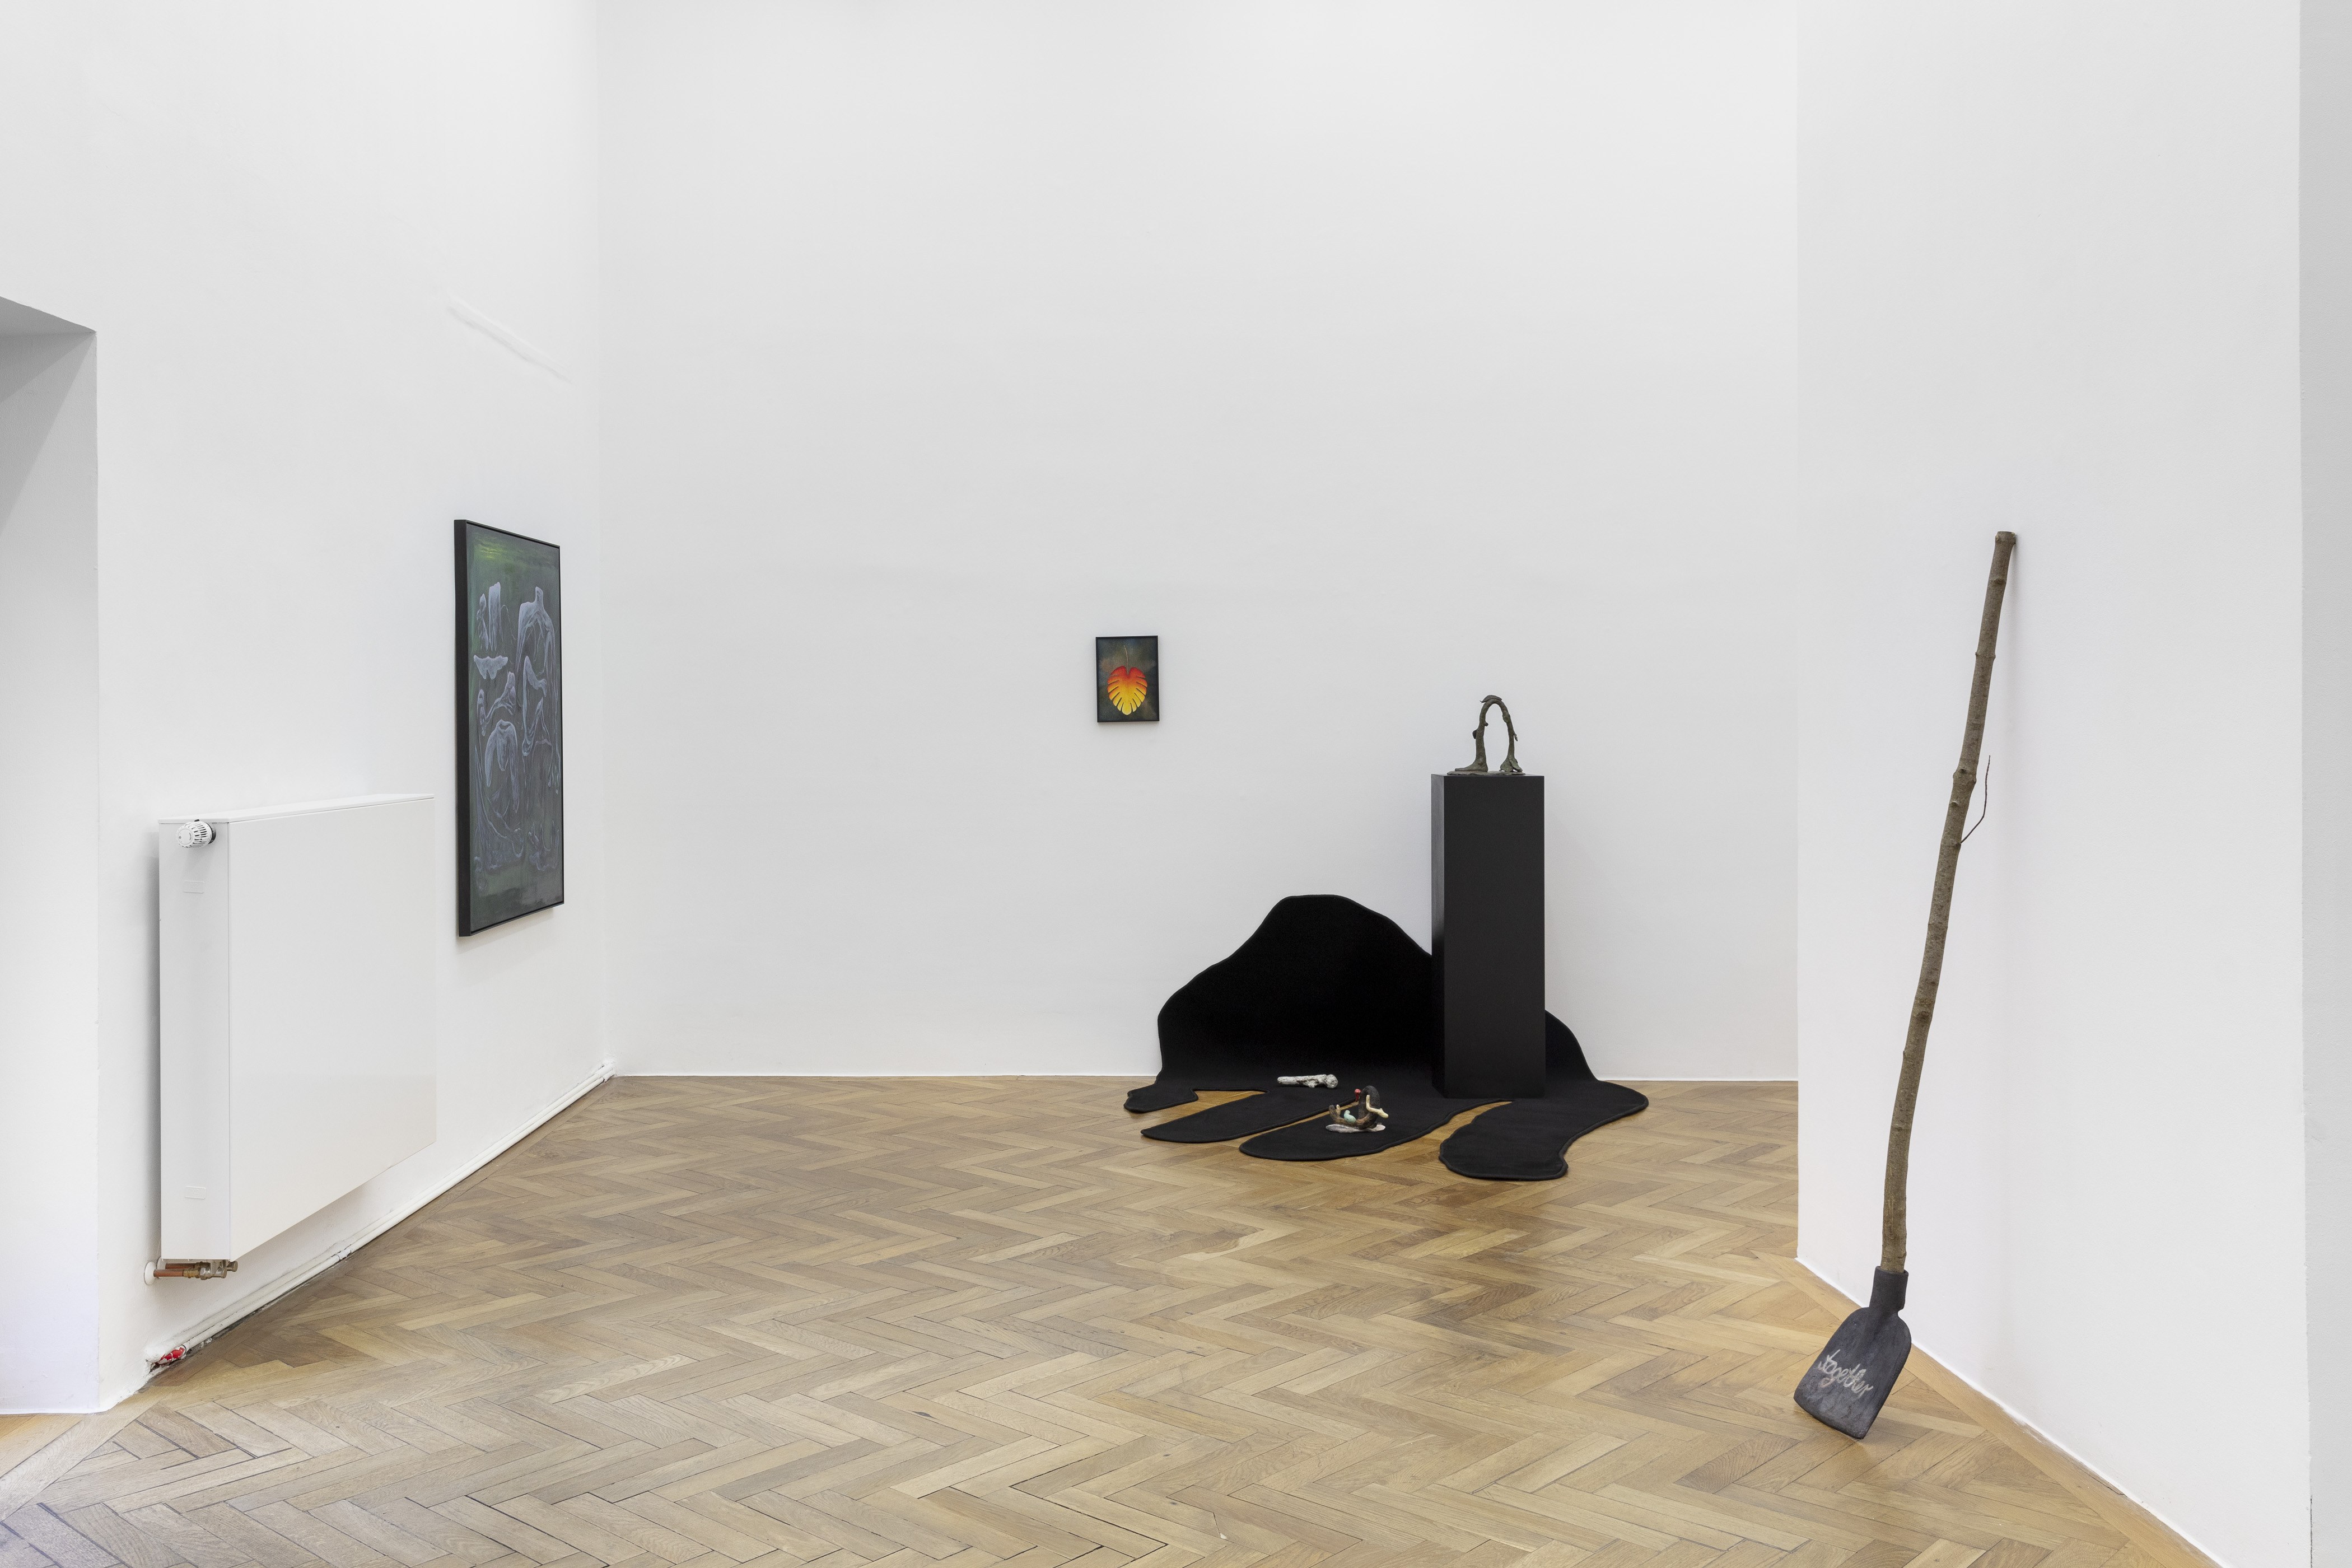 Veronika Hilger, Perpetual Dawn, 2023, installation view at Sperling, Munich